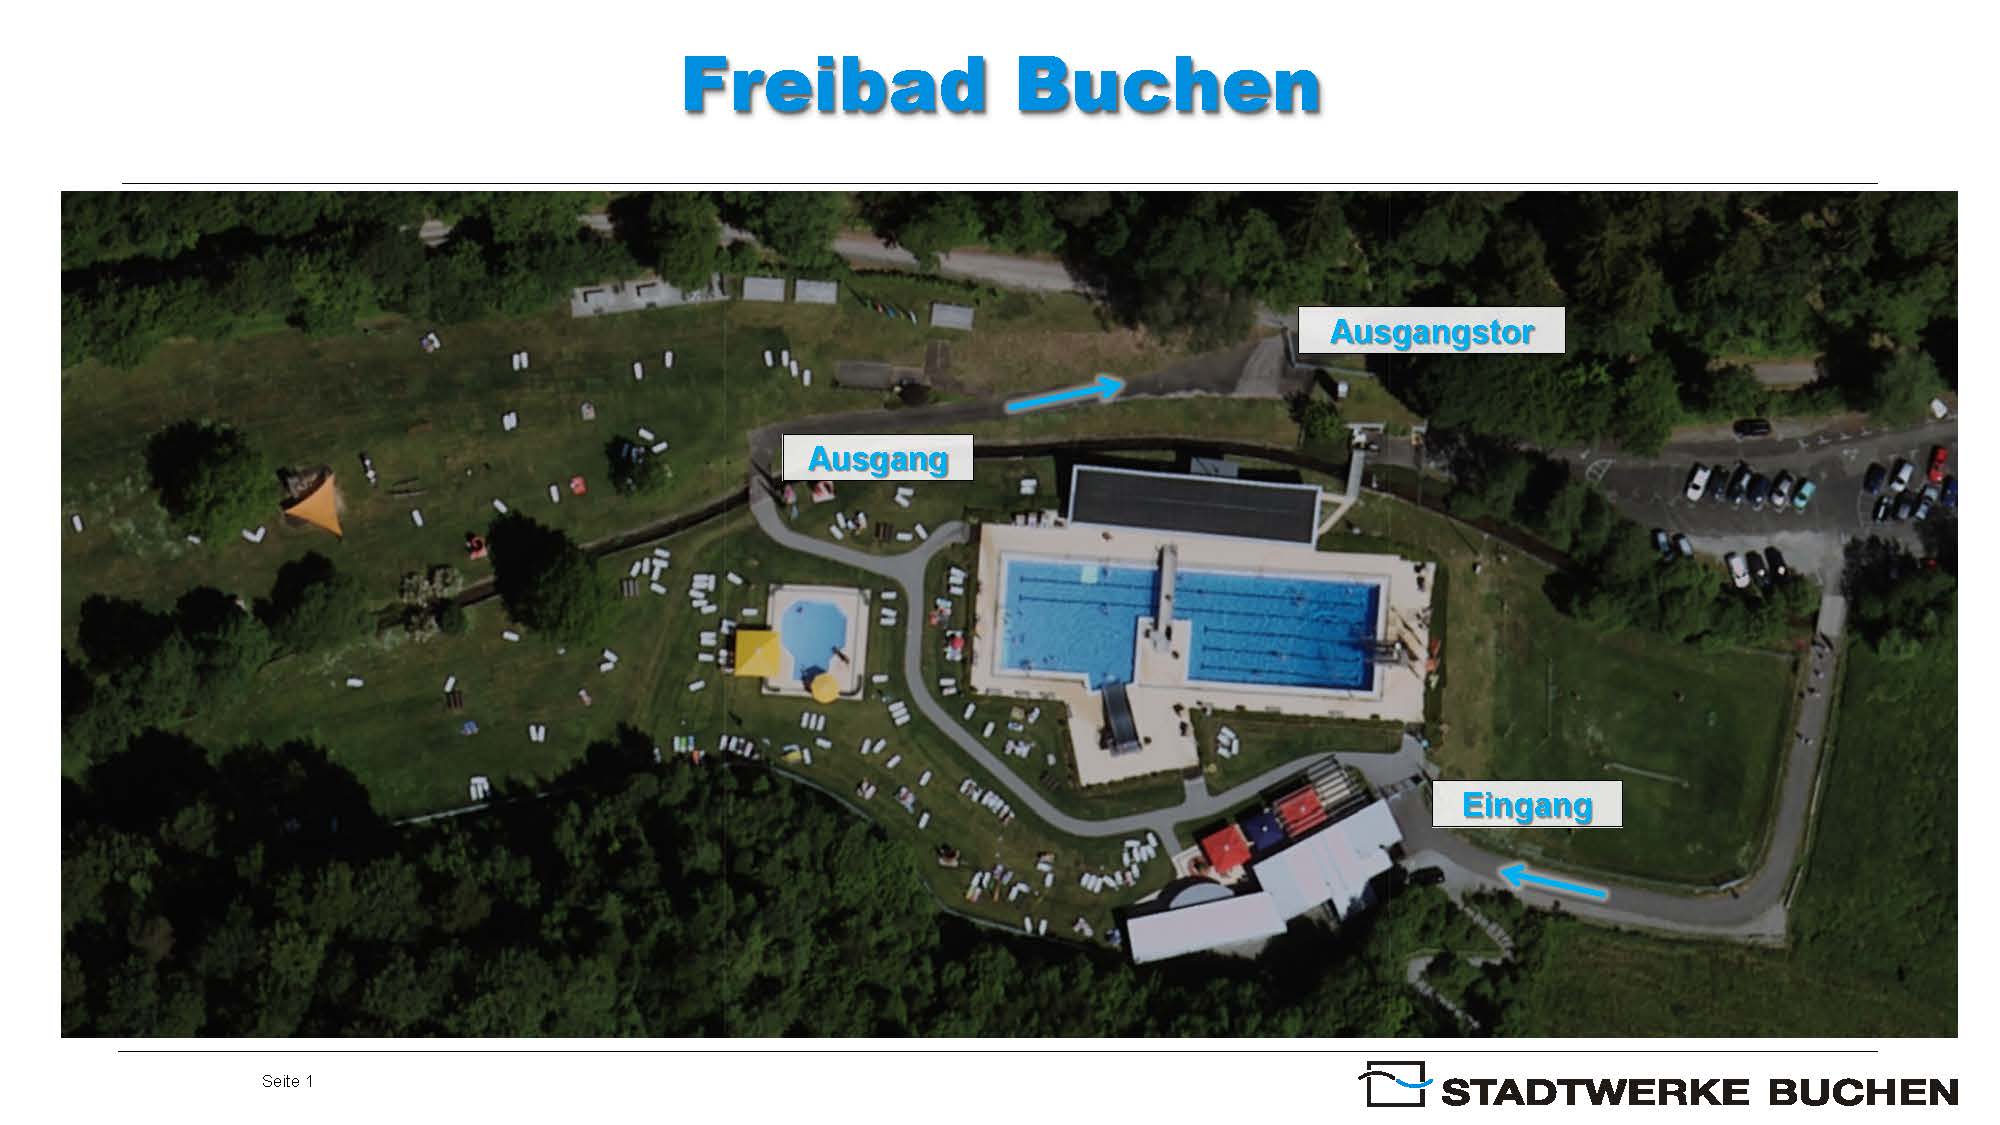 Freibad_Buchen.jpg - 133,59 kB